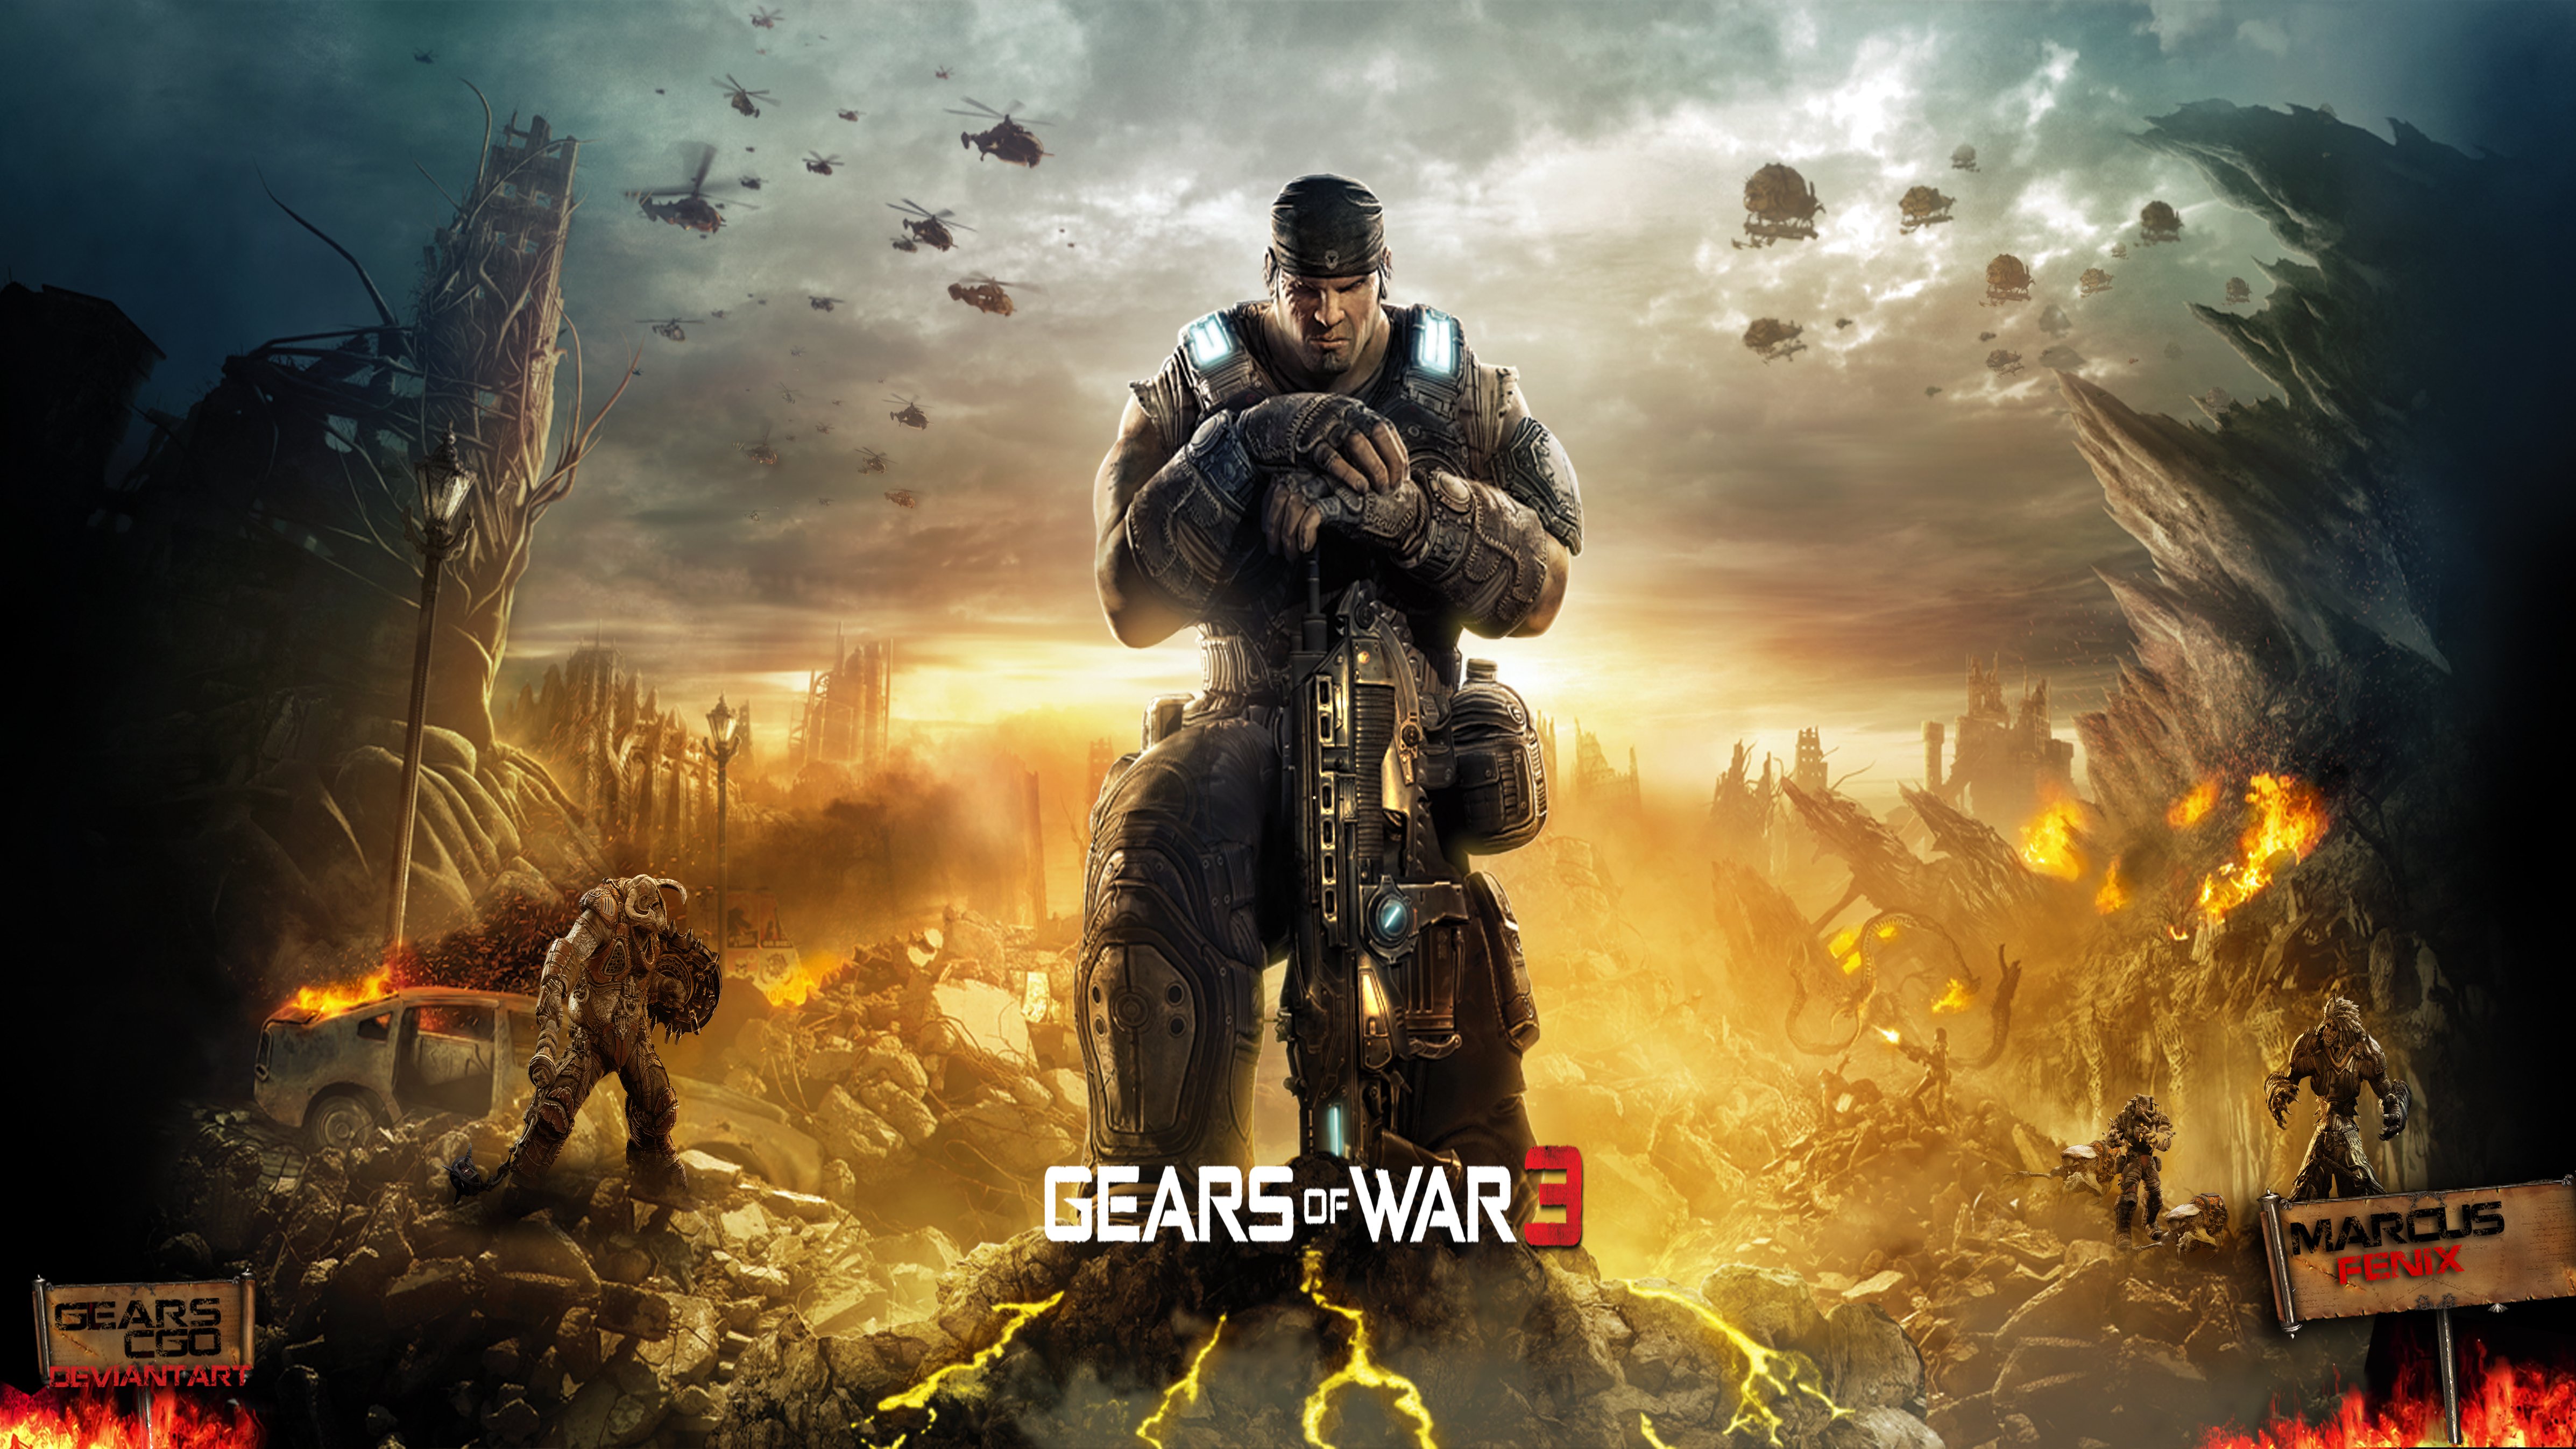 [49+] Gears Of War 3 Wallpapers on WallpaperSafari